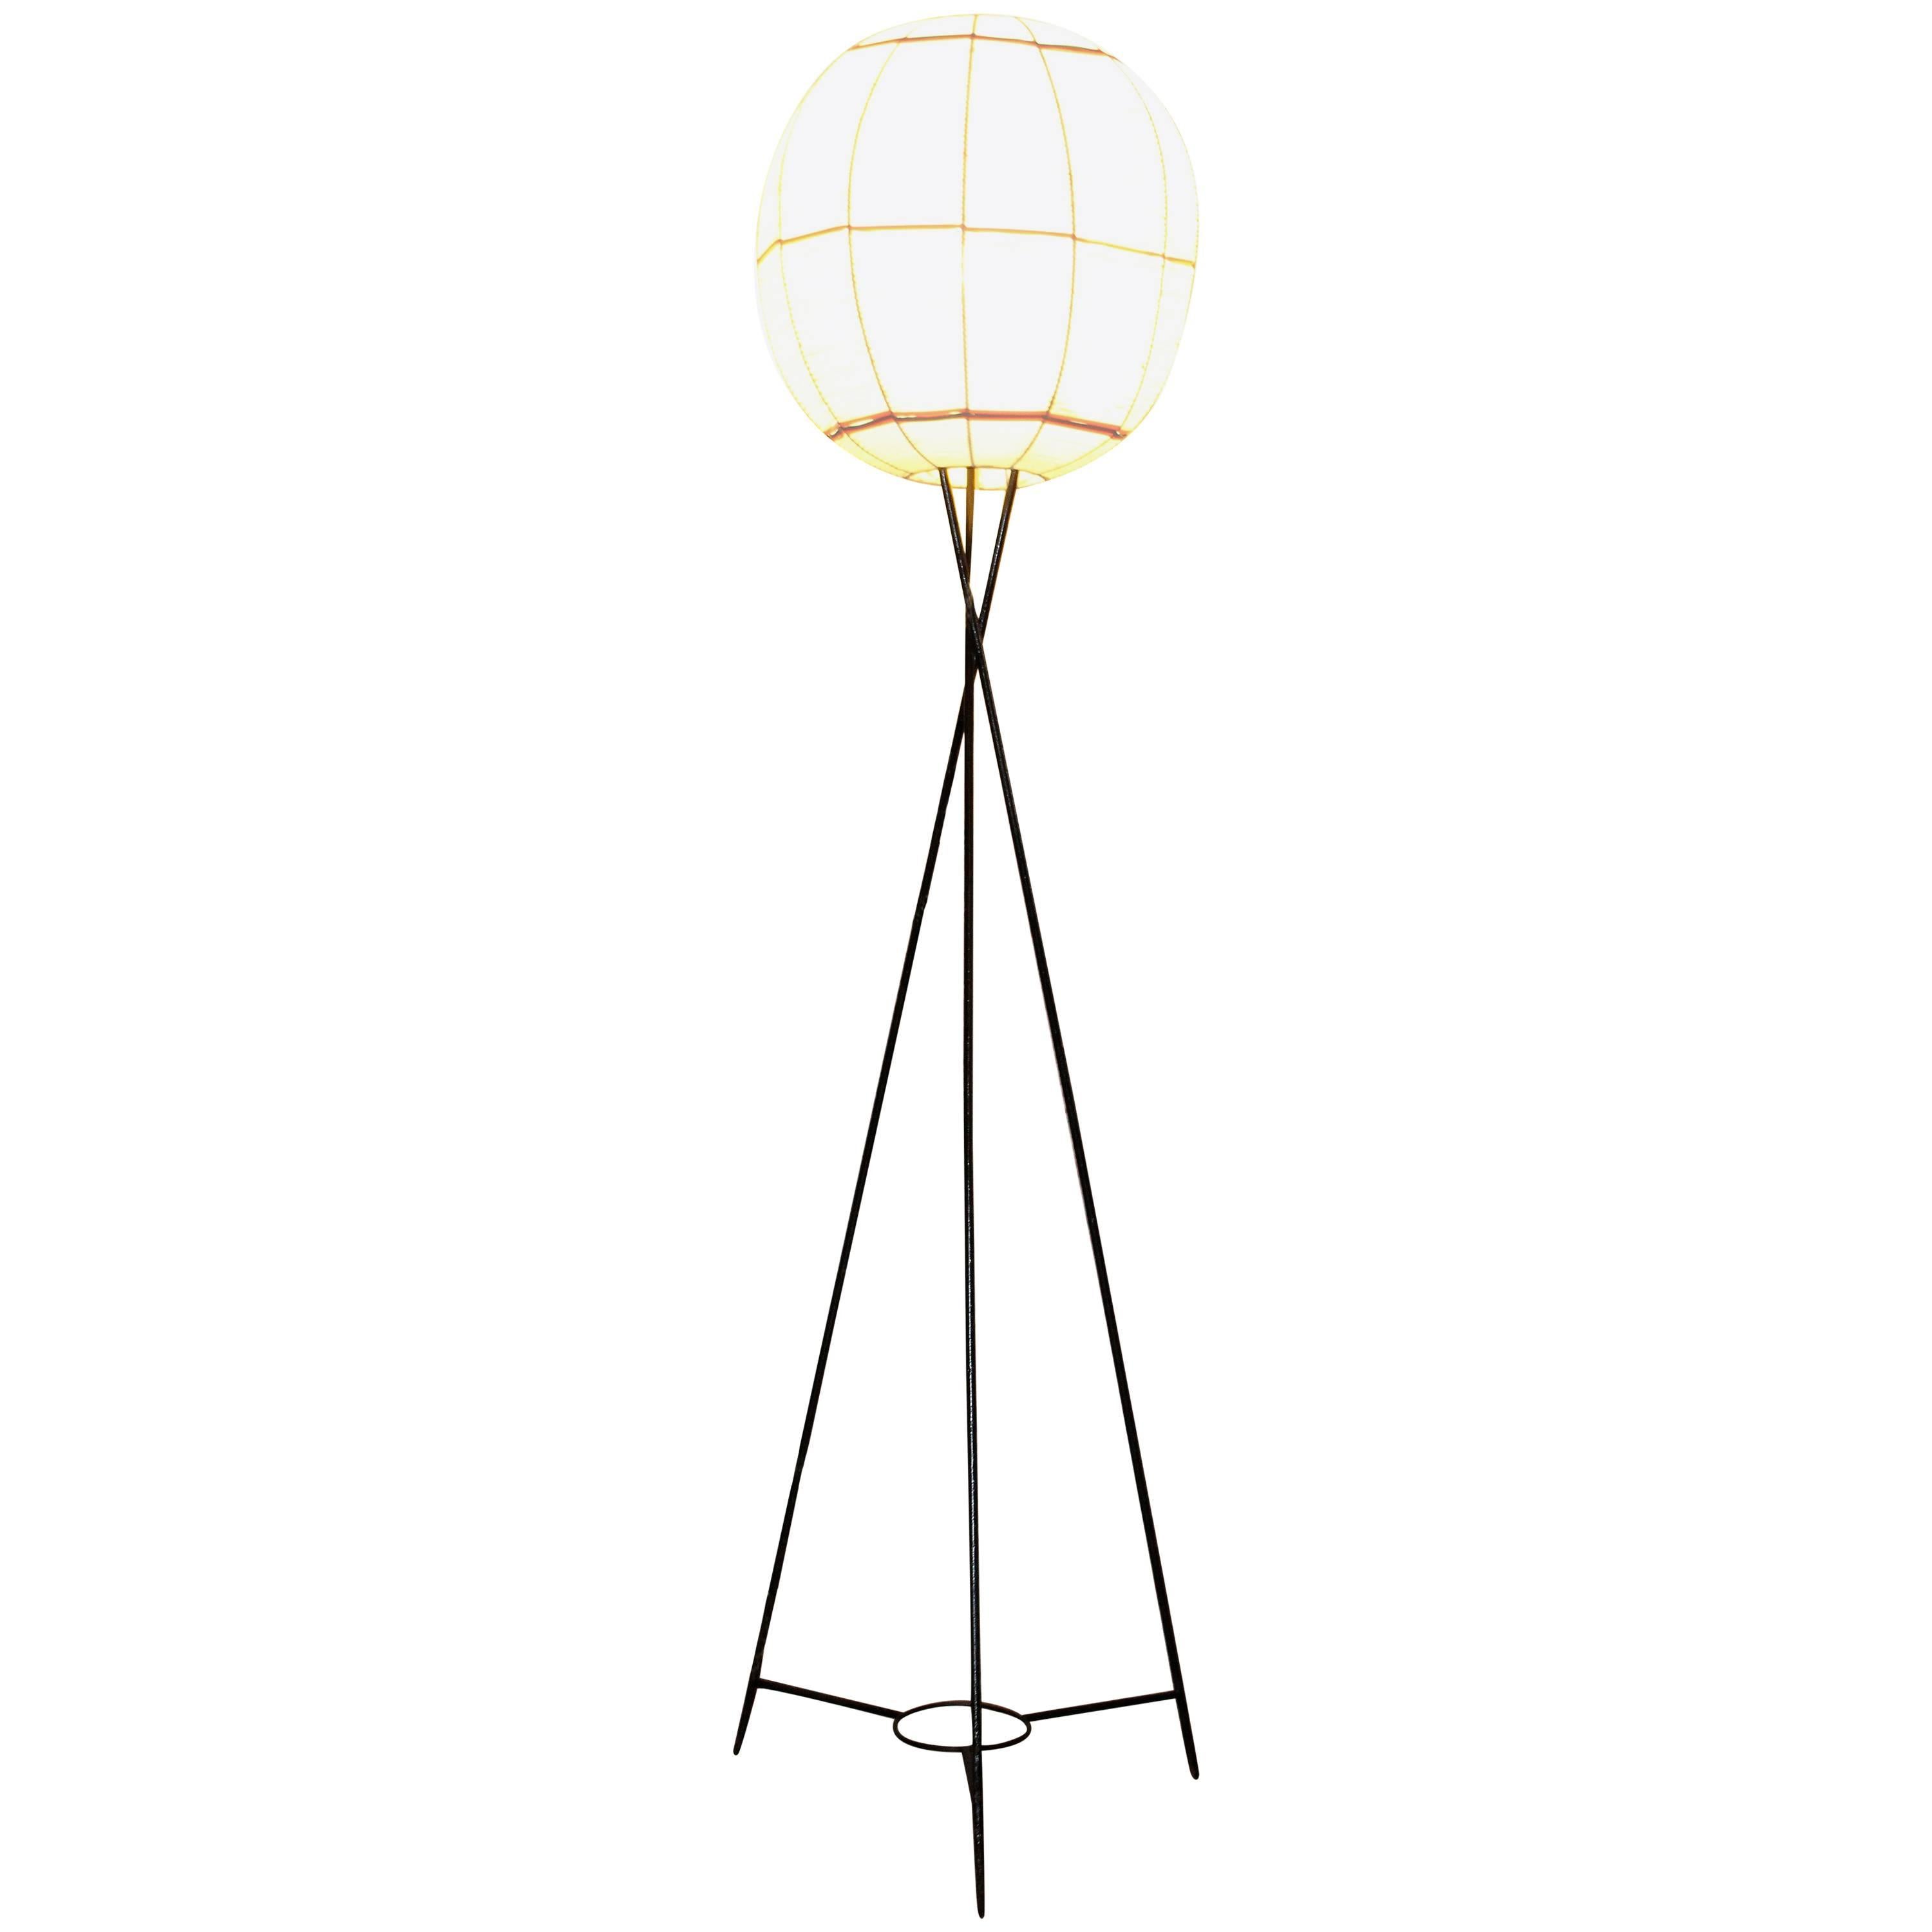 Italian Floor Lamp in Style of Isamu Noguchi